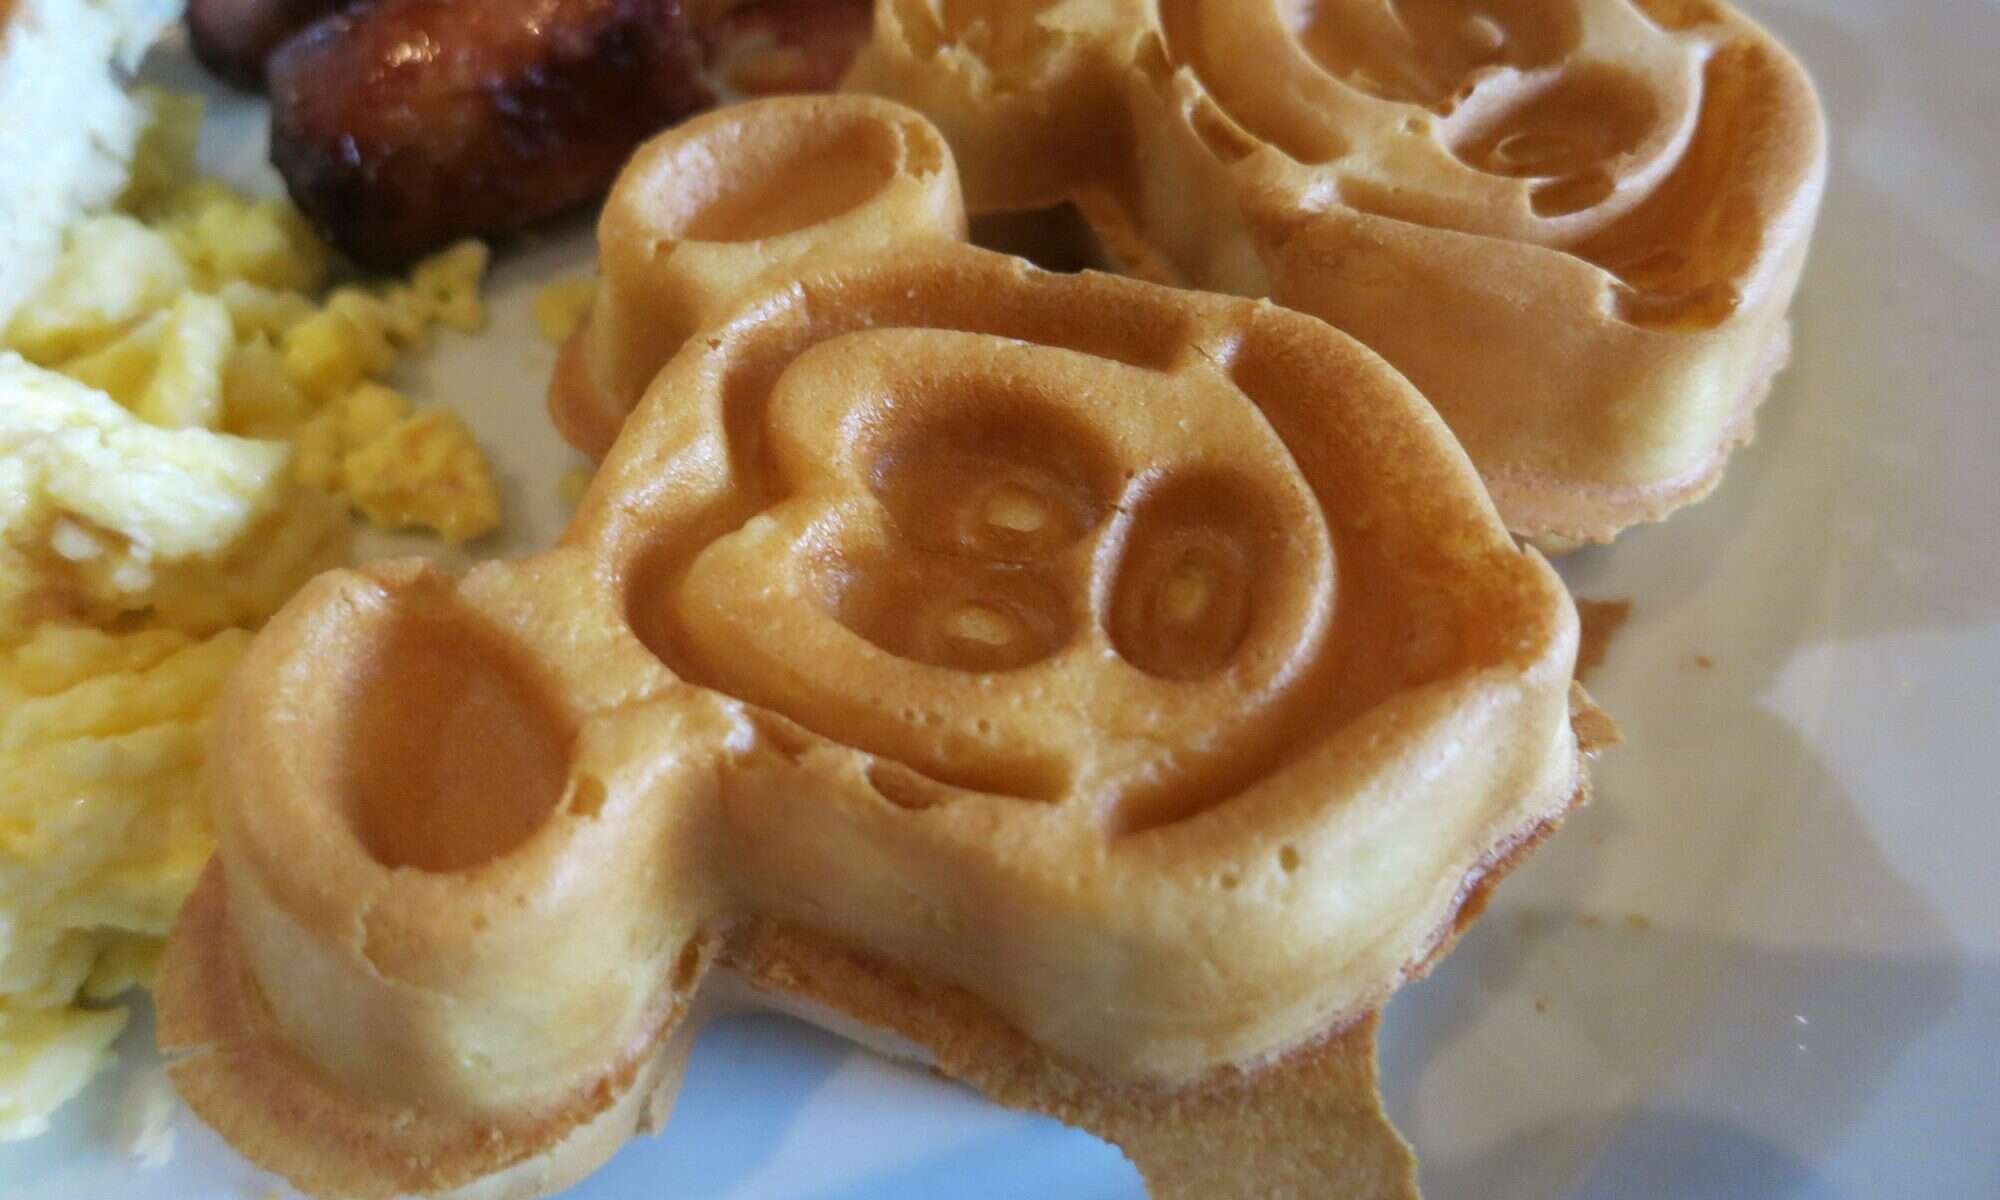 Mini Emojis Waffle Maker - Create 7 Unique Smiley Face Waffles or